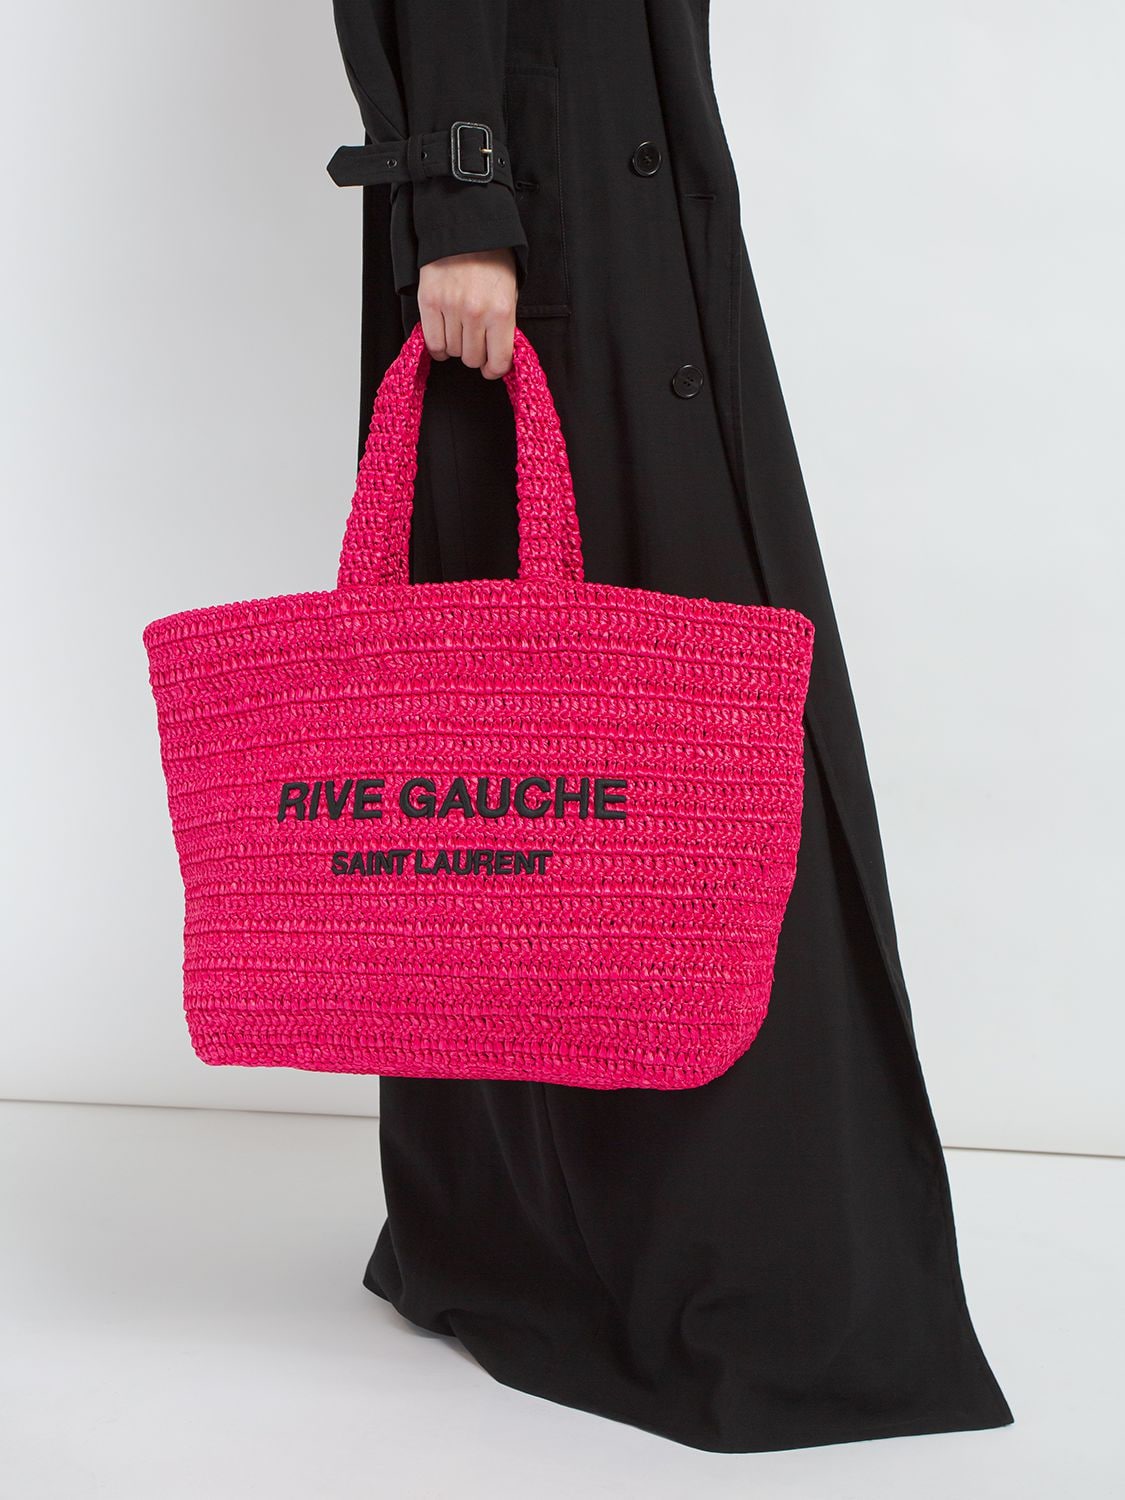 Rive gauche viscose tote bag - Saint Laurent - Women